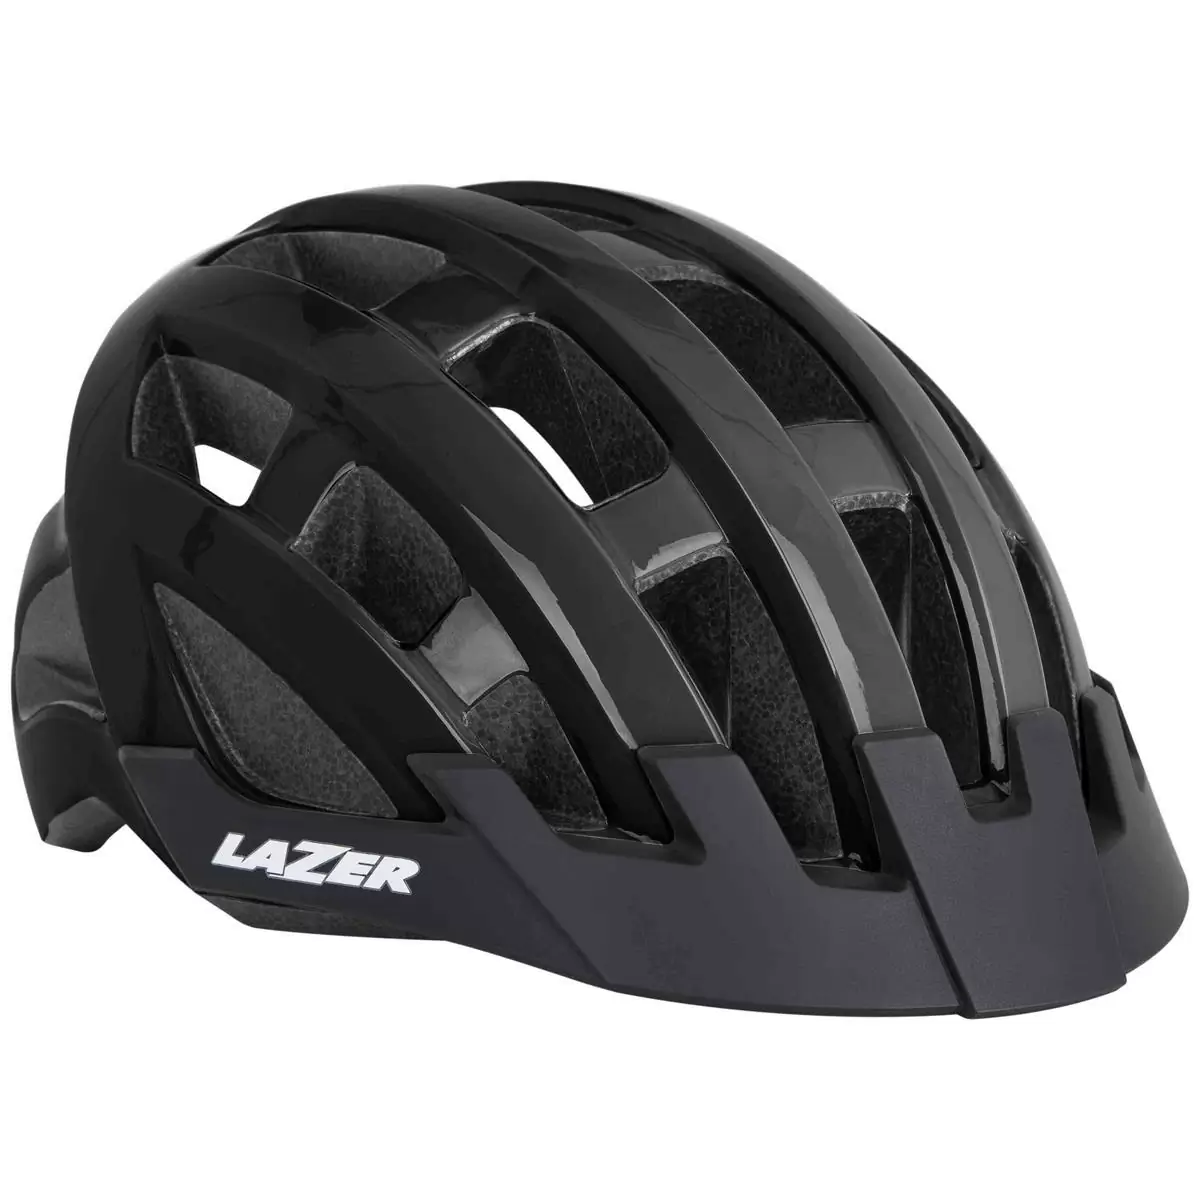 Helmet compact black one size (54-61) - image